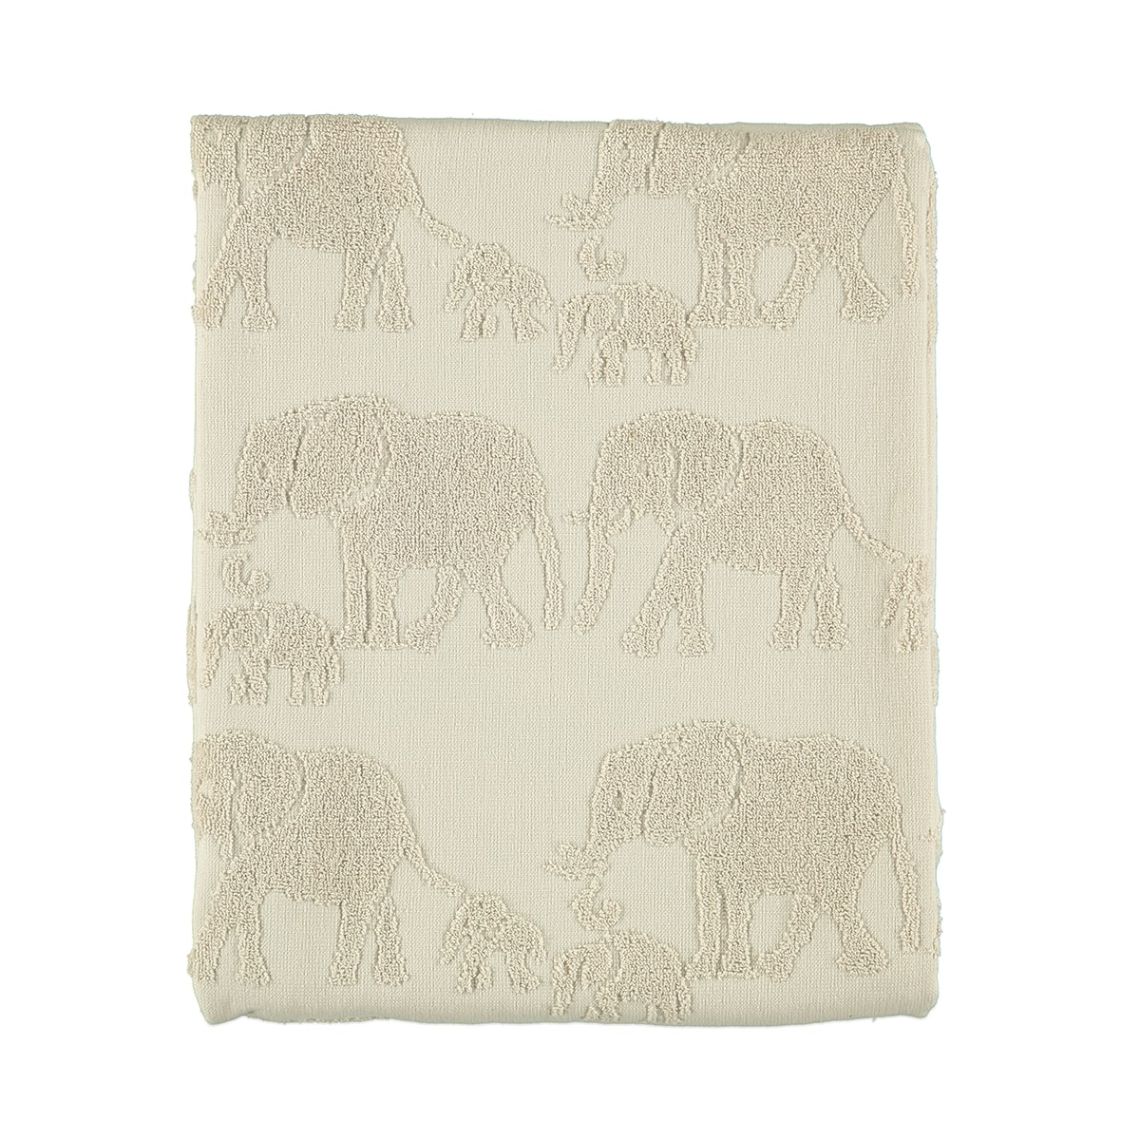 Kopia Elephant ett frottébadlakan från Noble house. Färg: White sand.